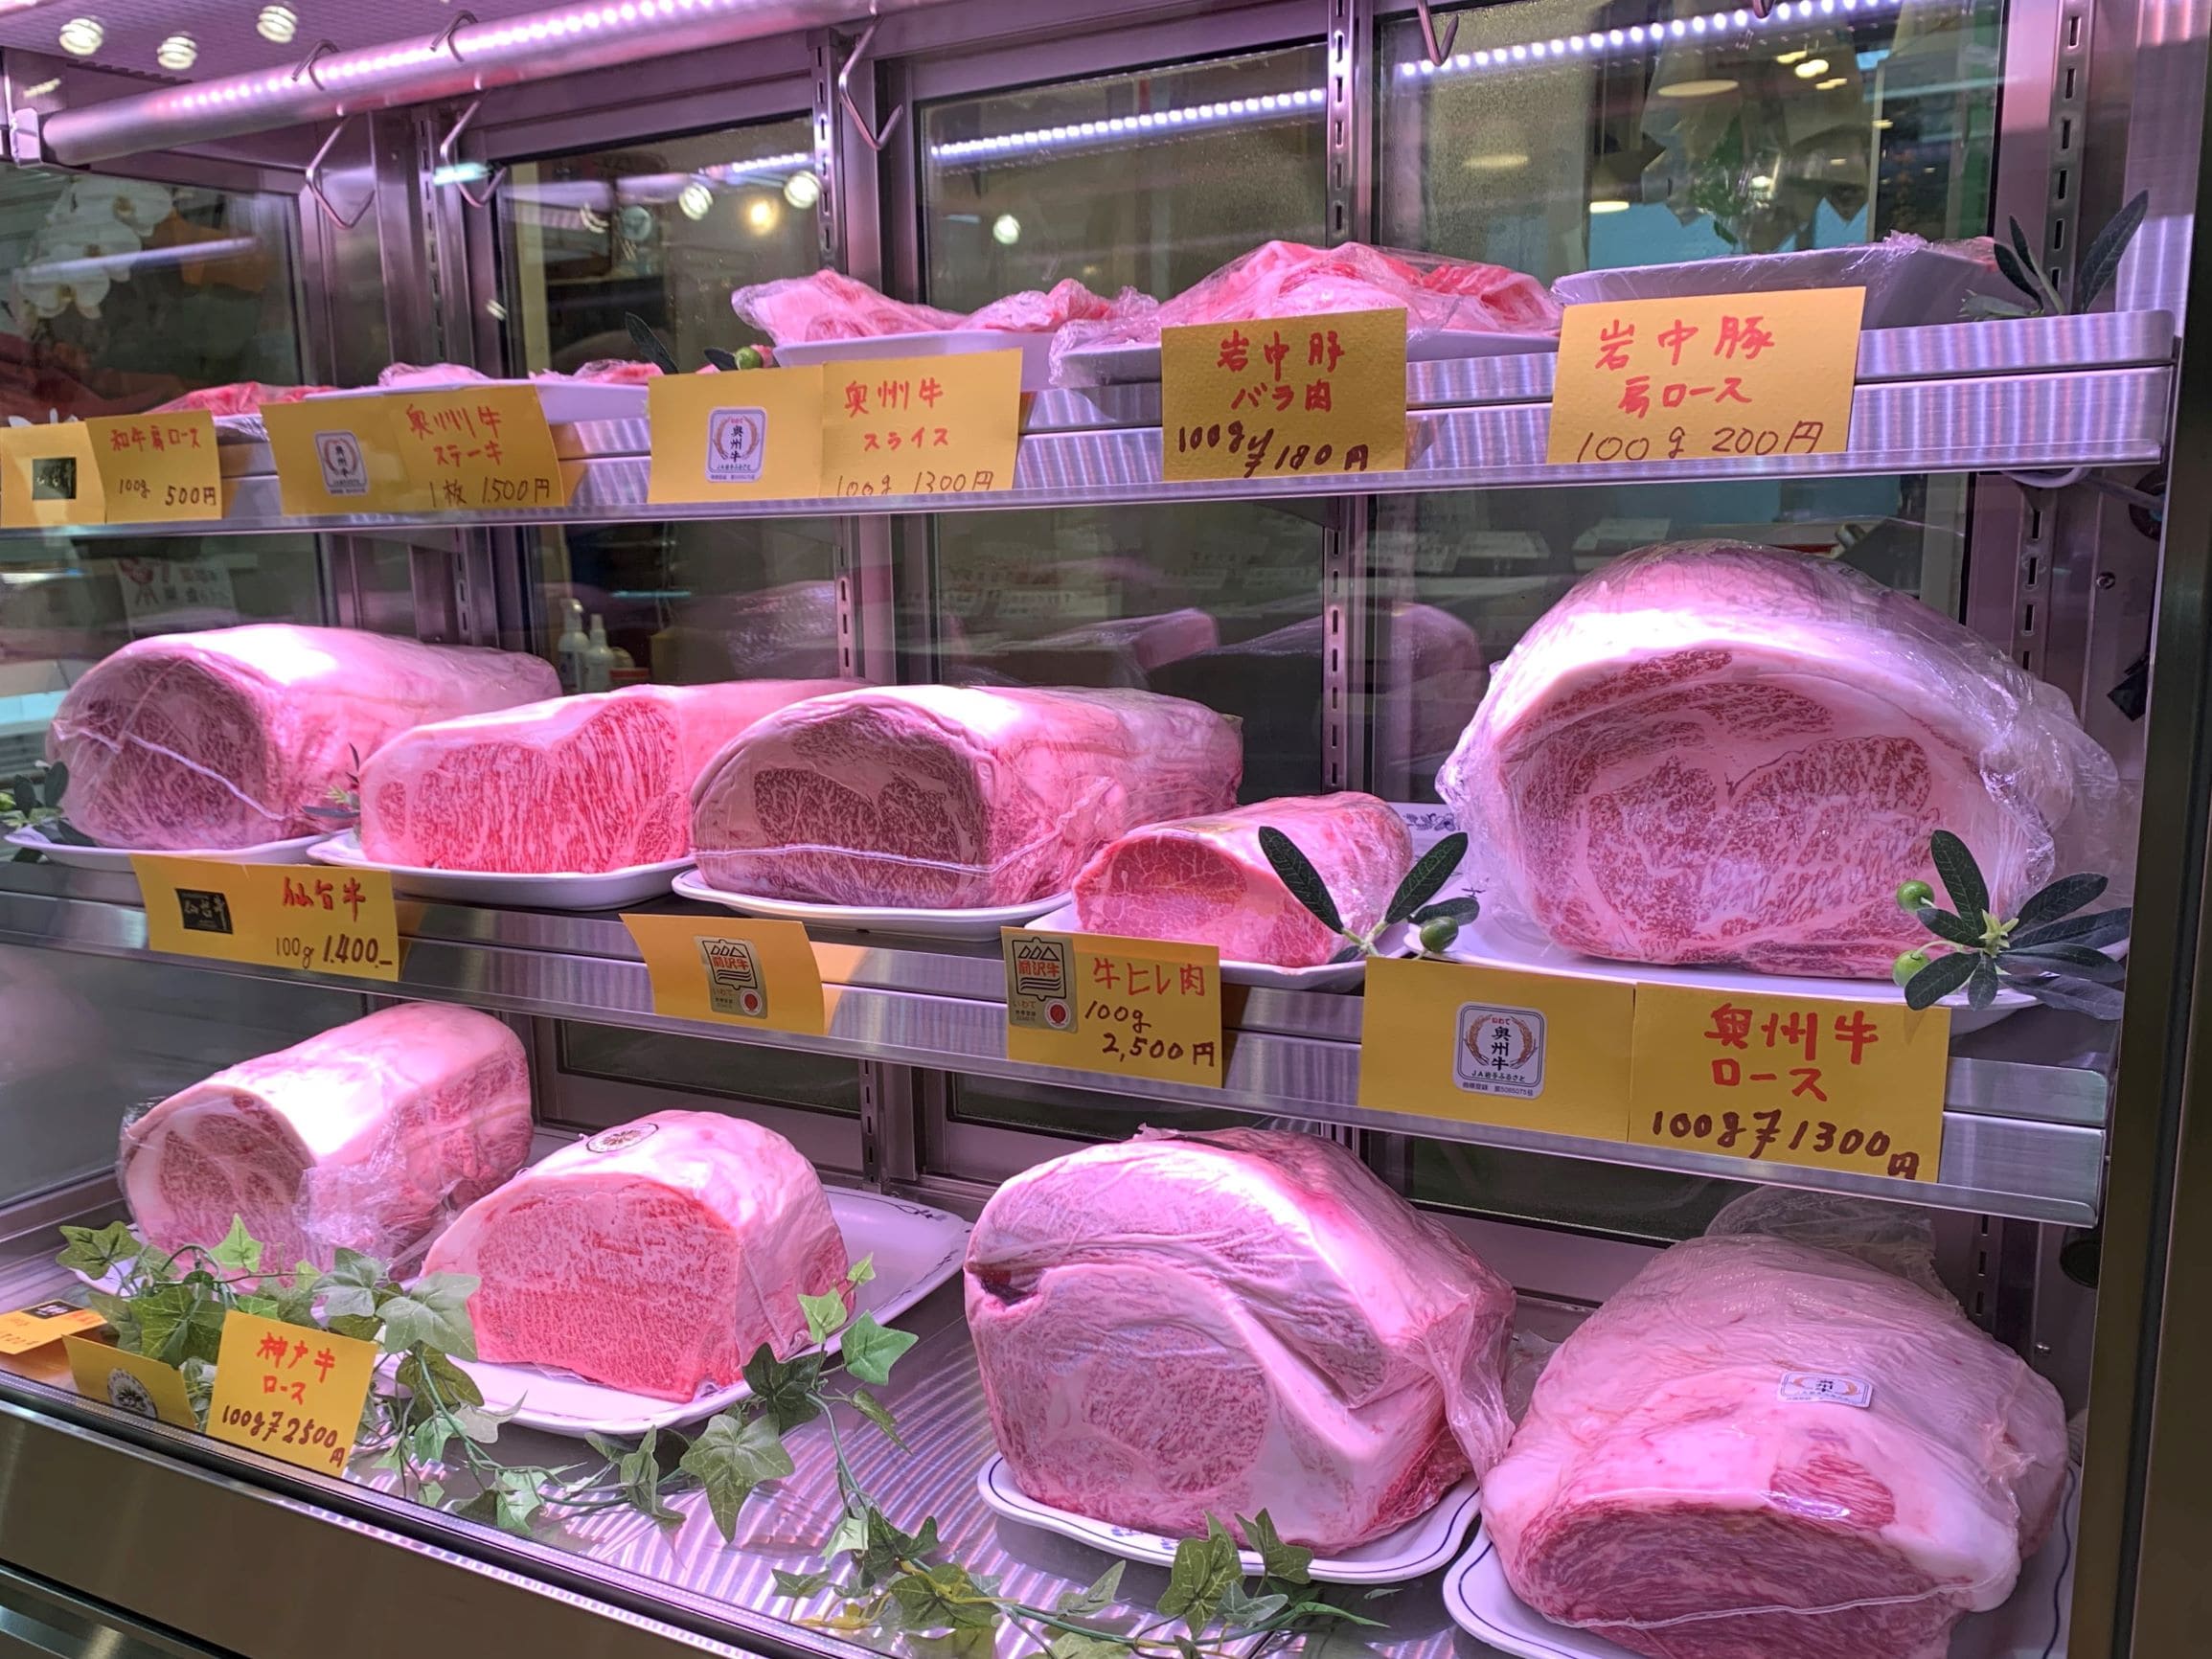 Wa-gyu,Genuine Japanese Beef ,Shimada Butcher Shop, Meat, Poultry ＆ Eggs, Tsukiji Uogashi